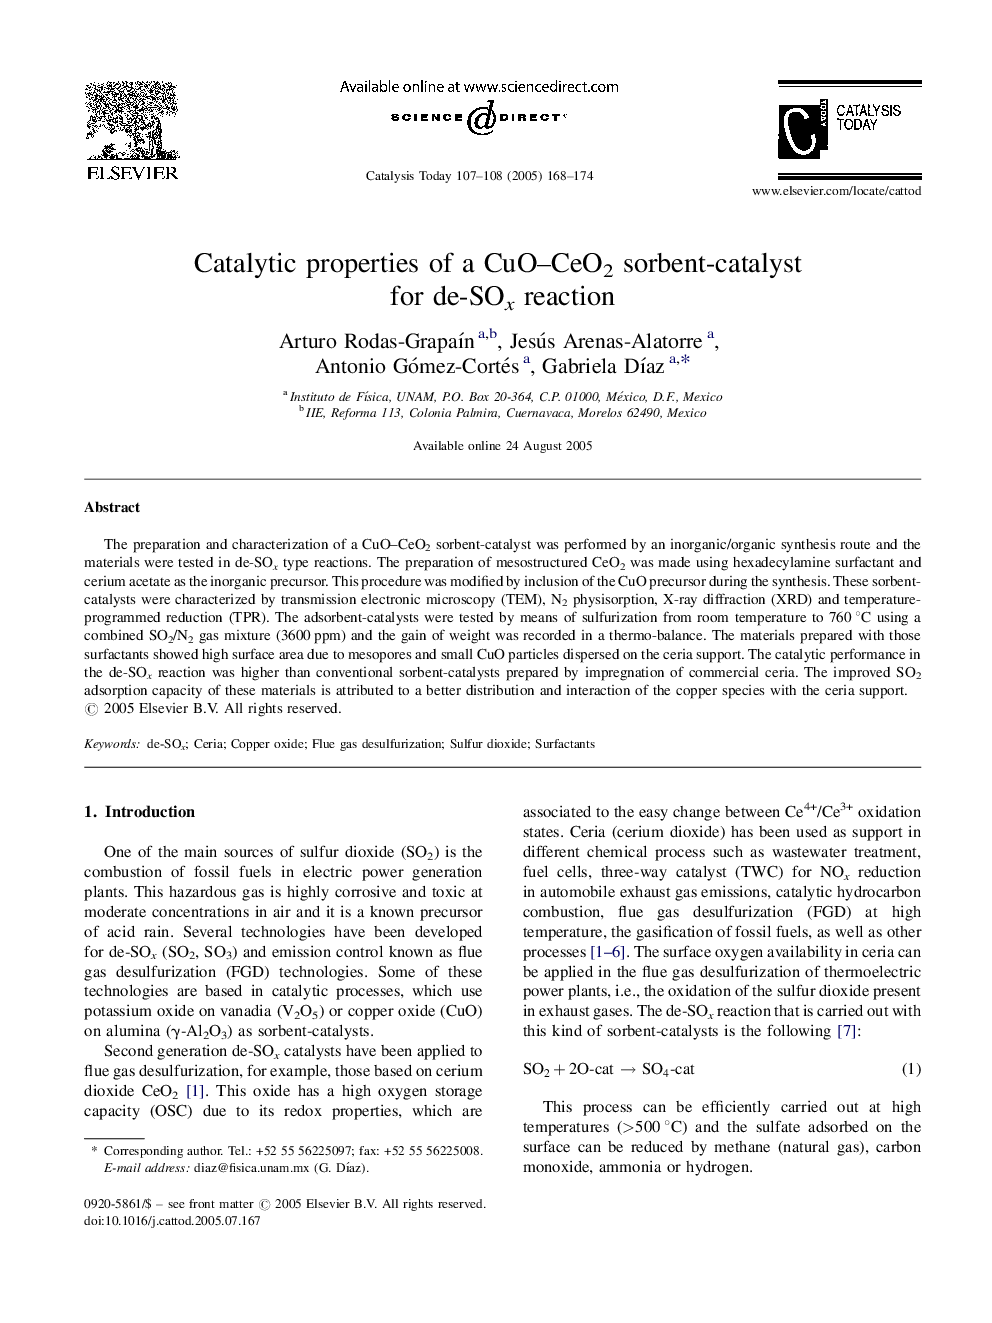 Catalytic properties of a CuO-CeO2 sorbent-catalyst for de-SOx reaction